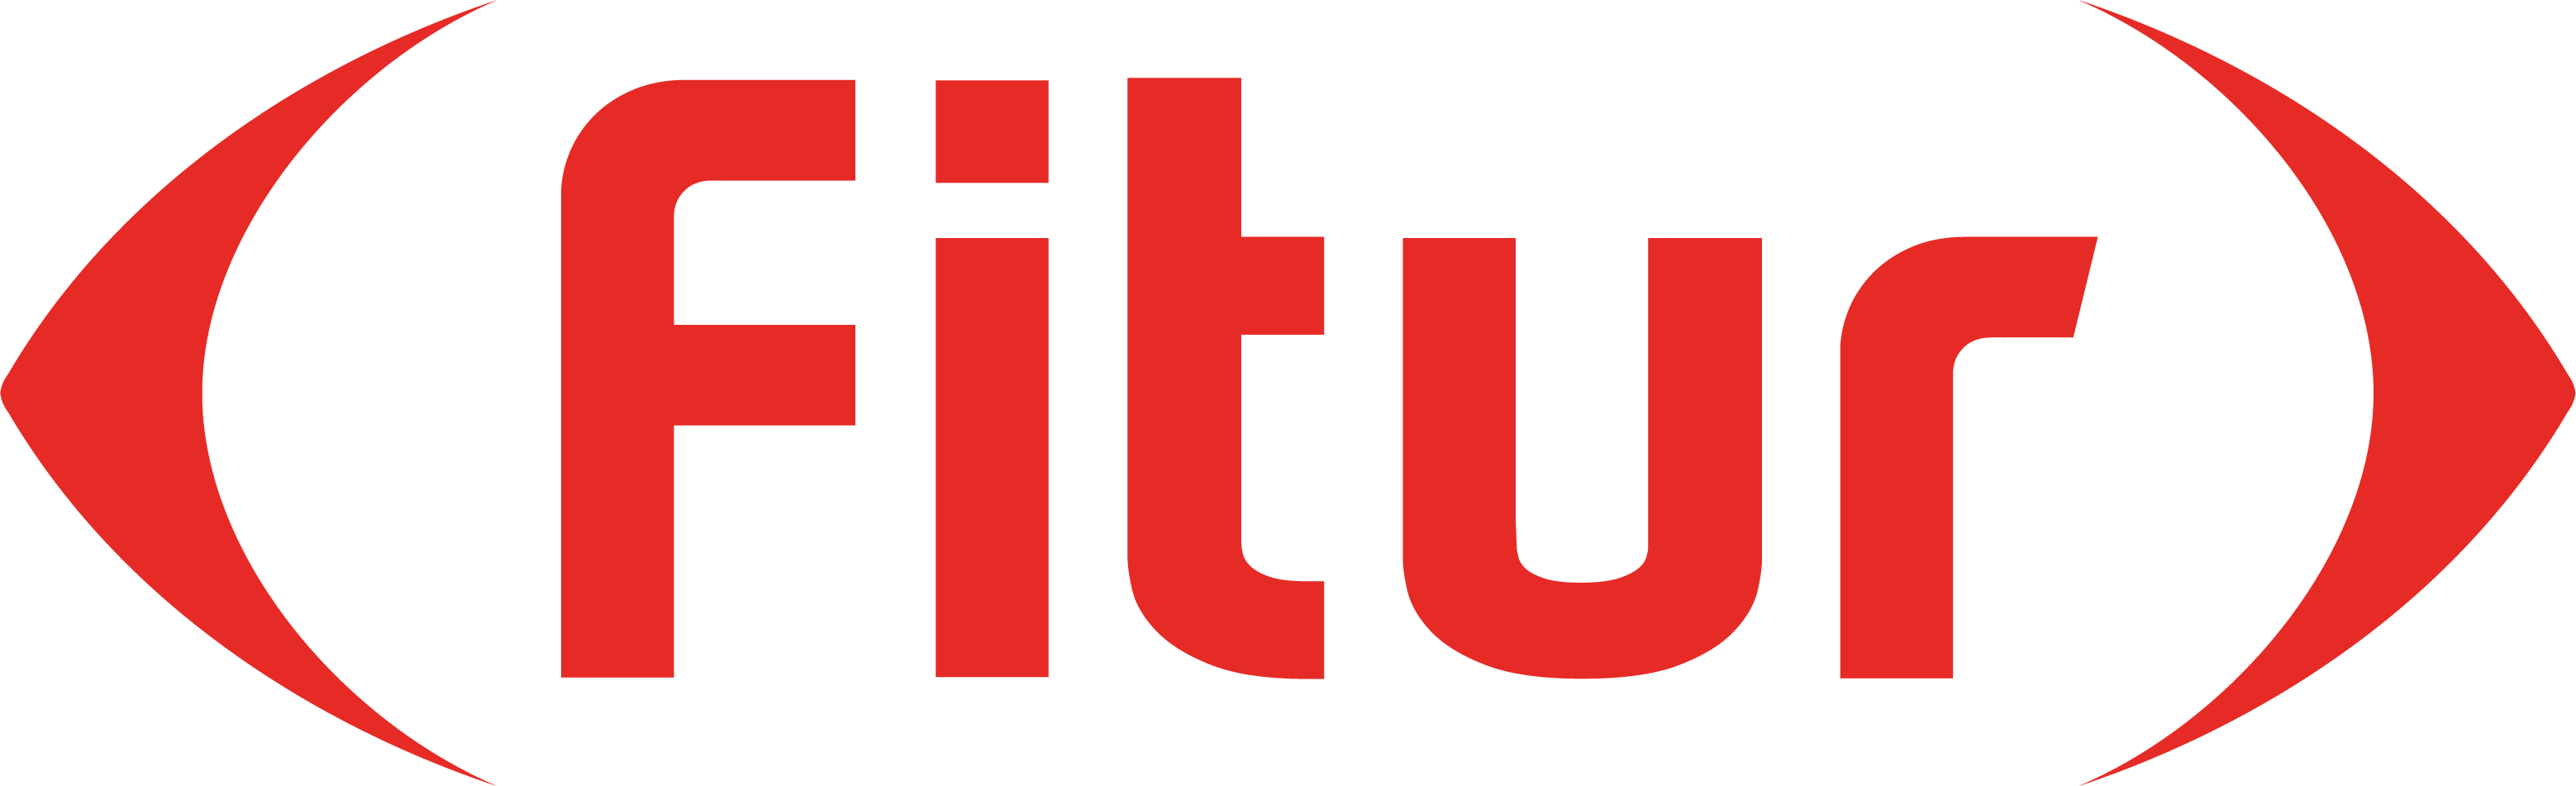 red logo of Fitur